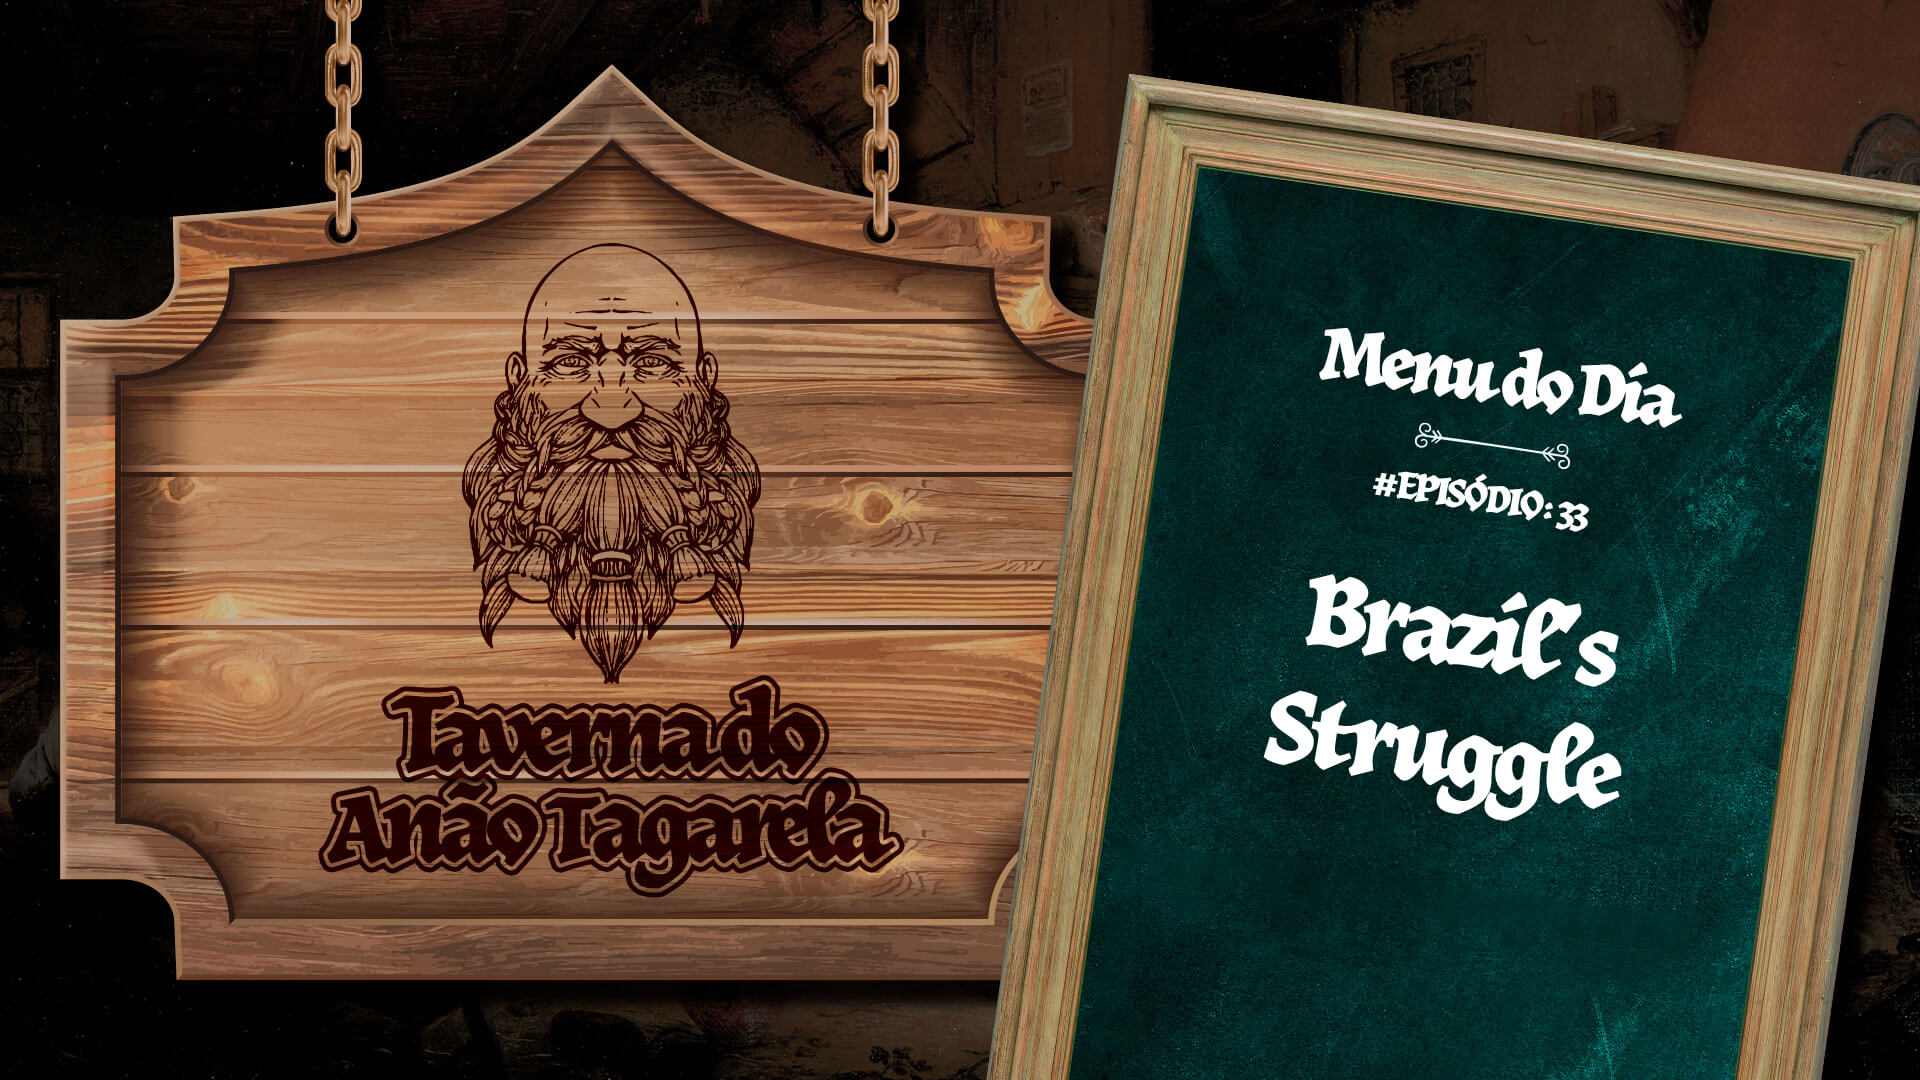 Brazil’s Struggle – Taverna do Anão Tagarela #33